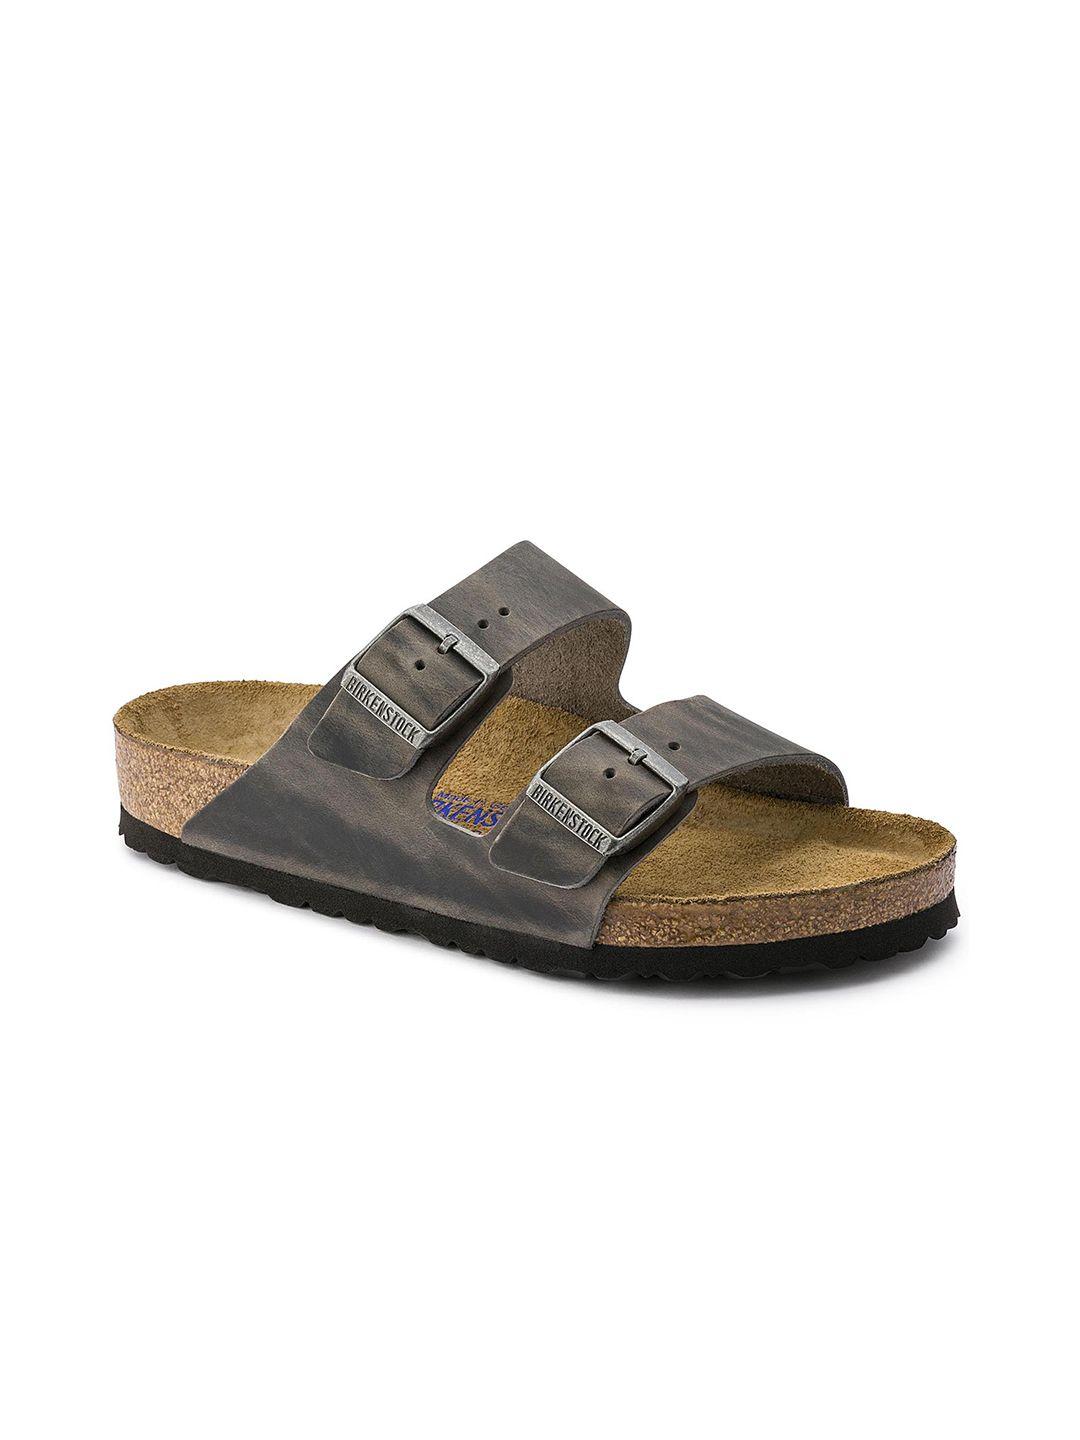 birkenstock unisex taupe arizona oiled leather regular width comfort sandals